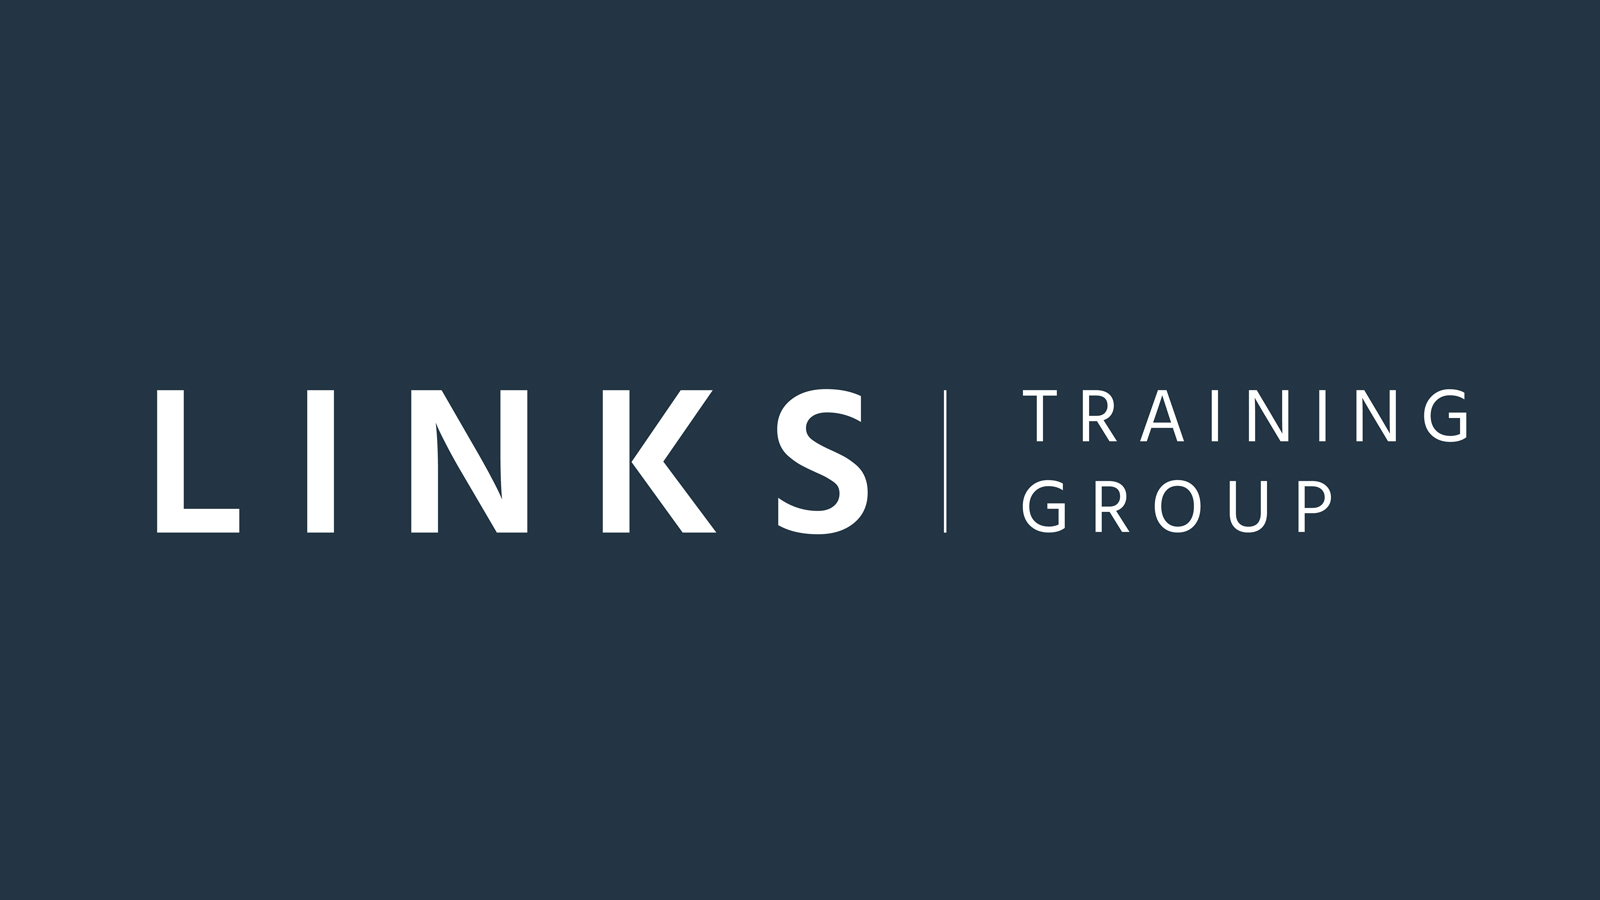 LINKS Training Group